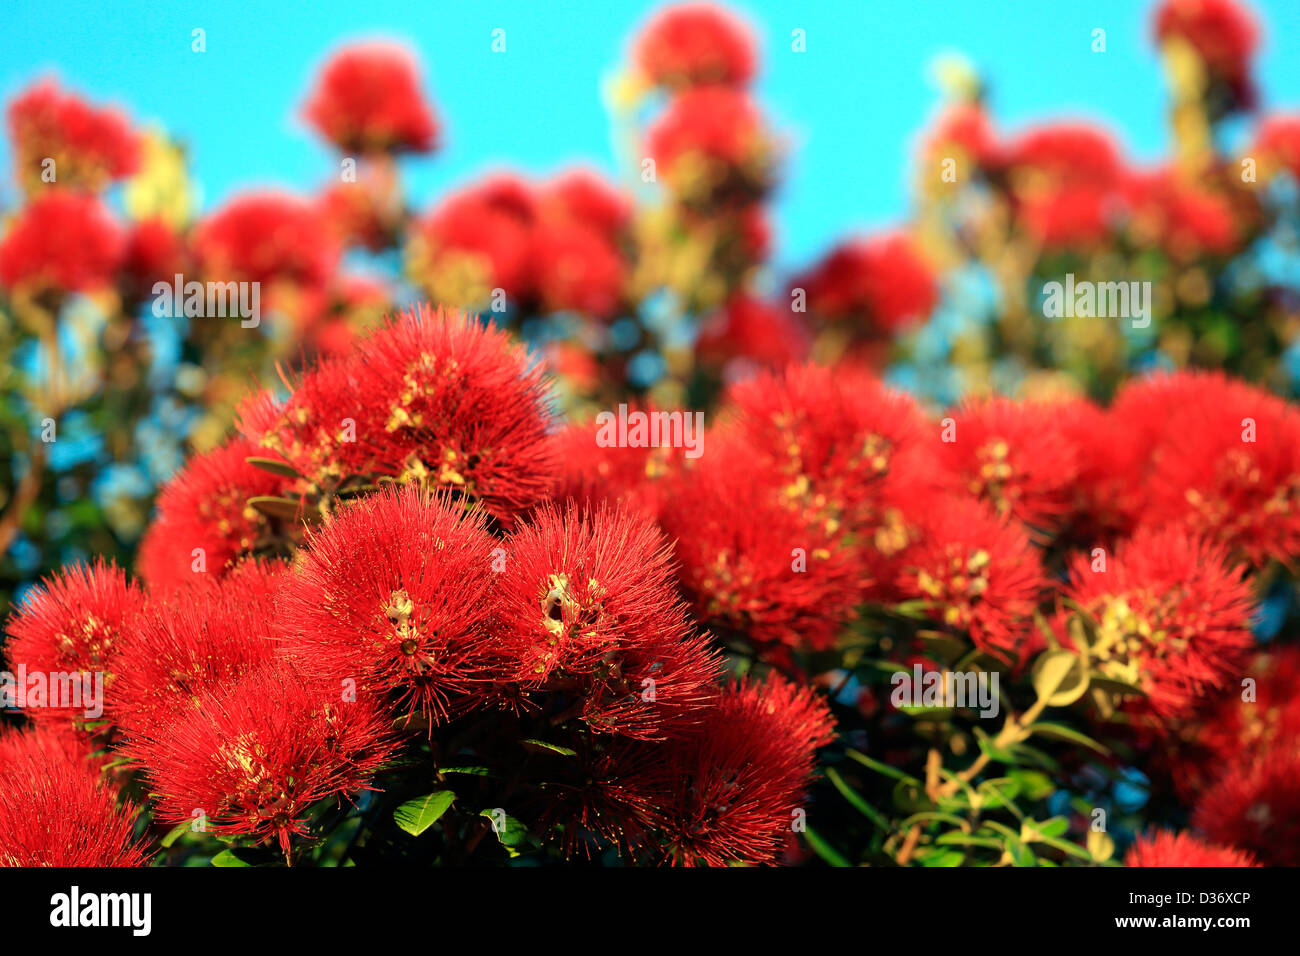 Pohutukawa tree flowers bright red summerP blossoms Stock Photo